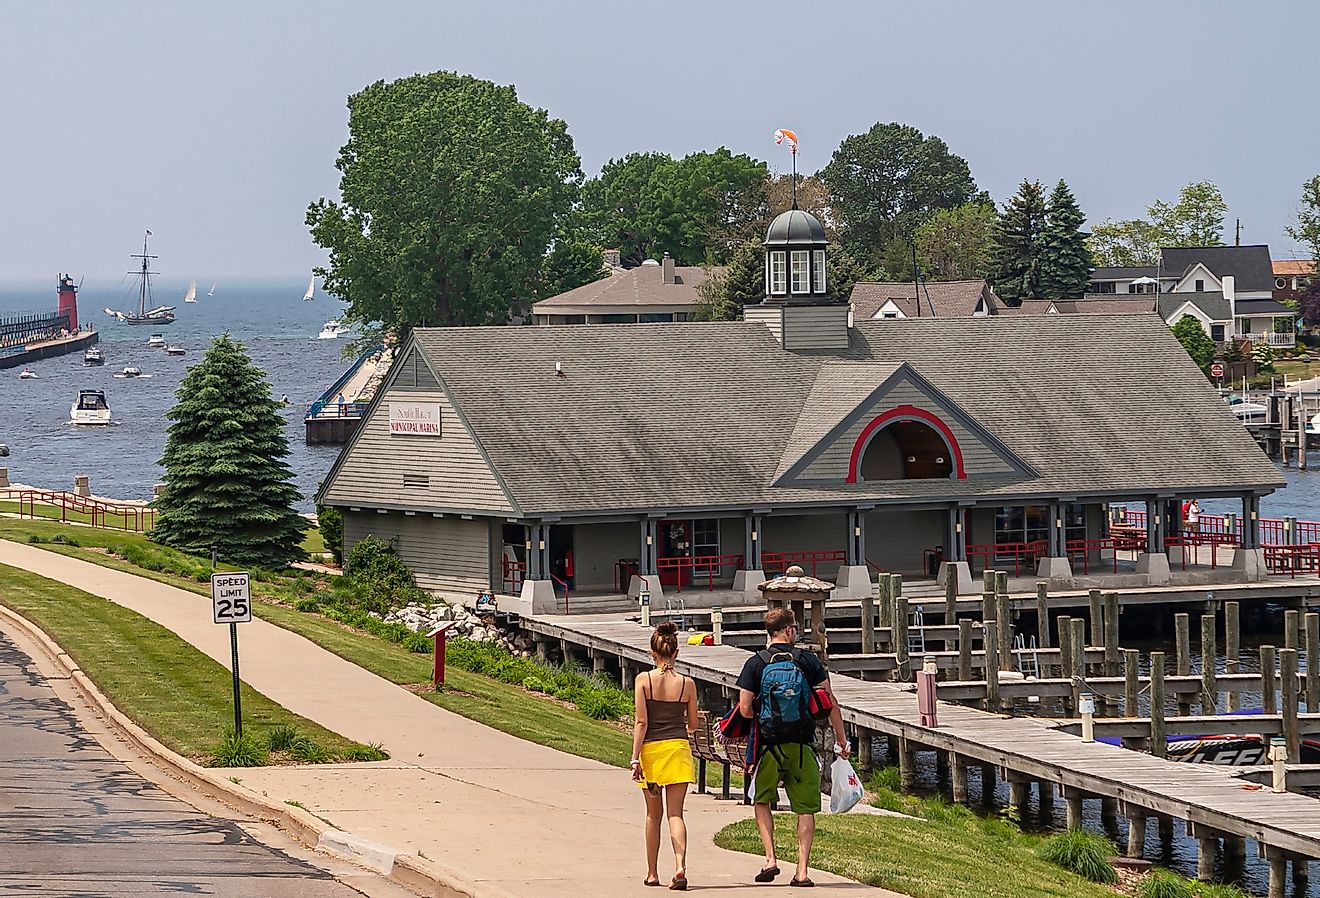 People walking in South Haven, Michigan. Image credit Claudine Van Massenhove via Shutterstock